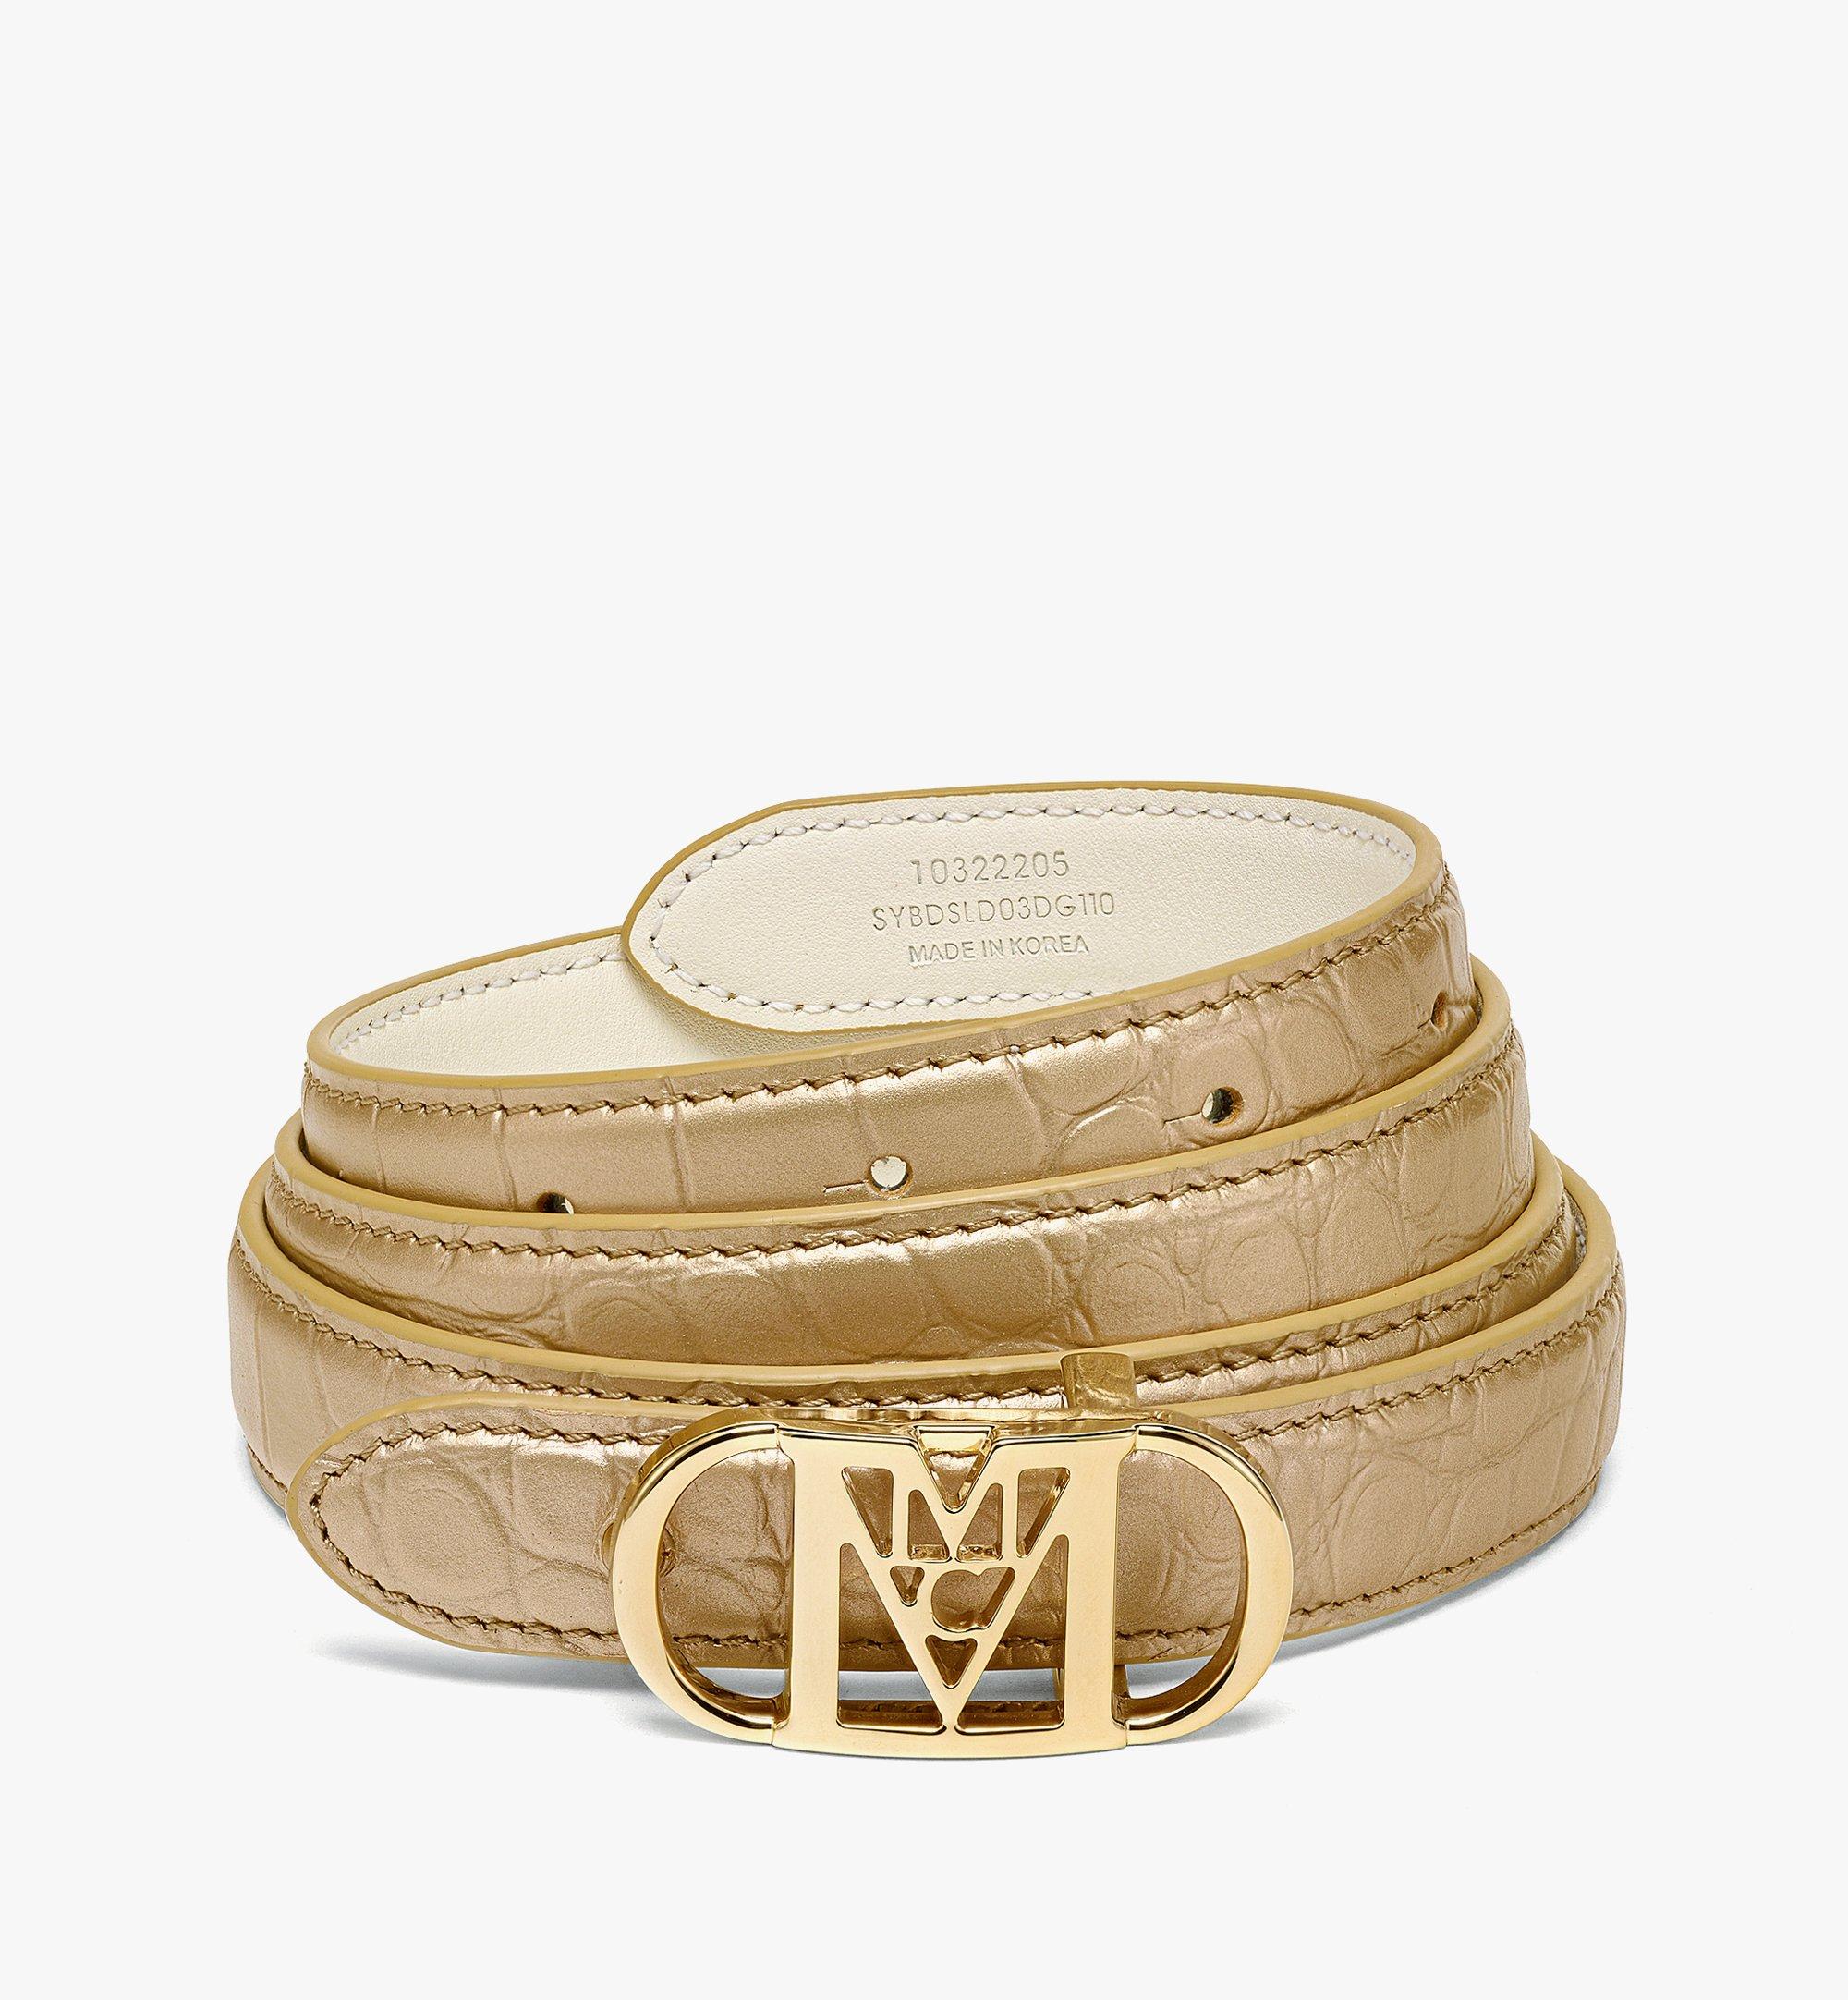 MCM Mode Travia Reversible Belt in Metallic Croco-Embossed Leather Gold MYBDSLD03DG110 Alternate View 1